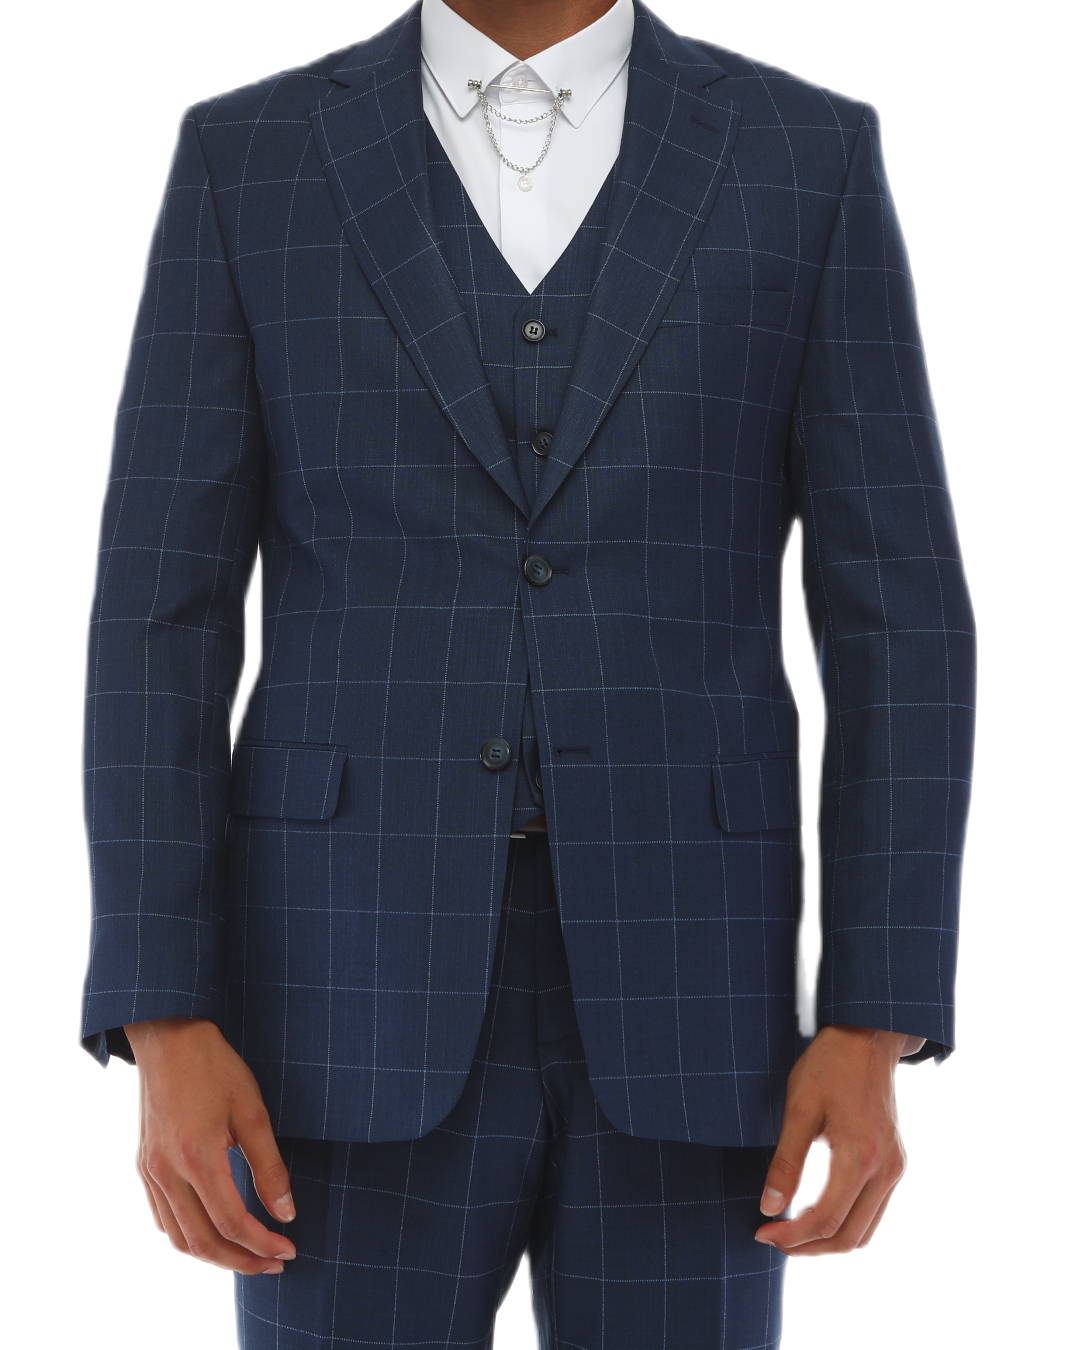 BlueJack Iconyn - Blau &amp; Hellblauer Match Suit - Dreiteiliger Anzug